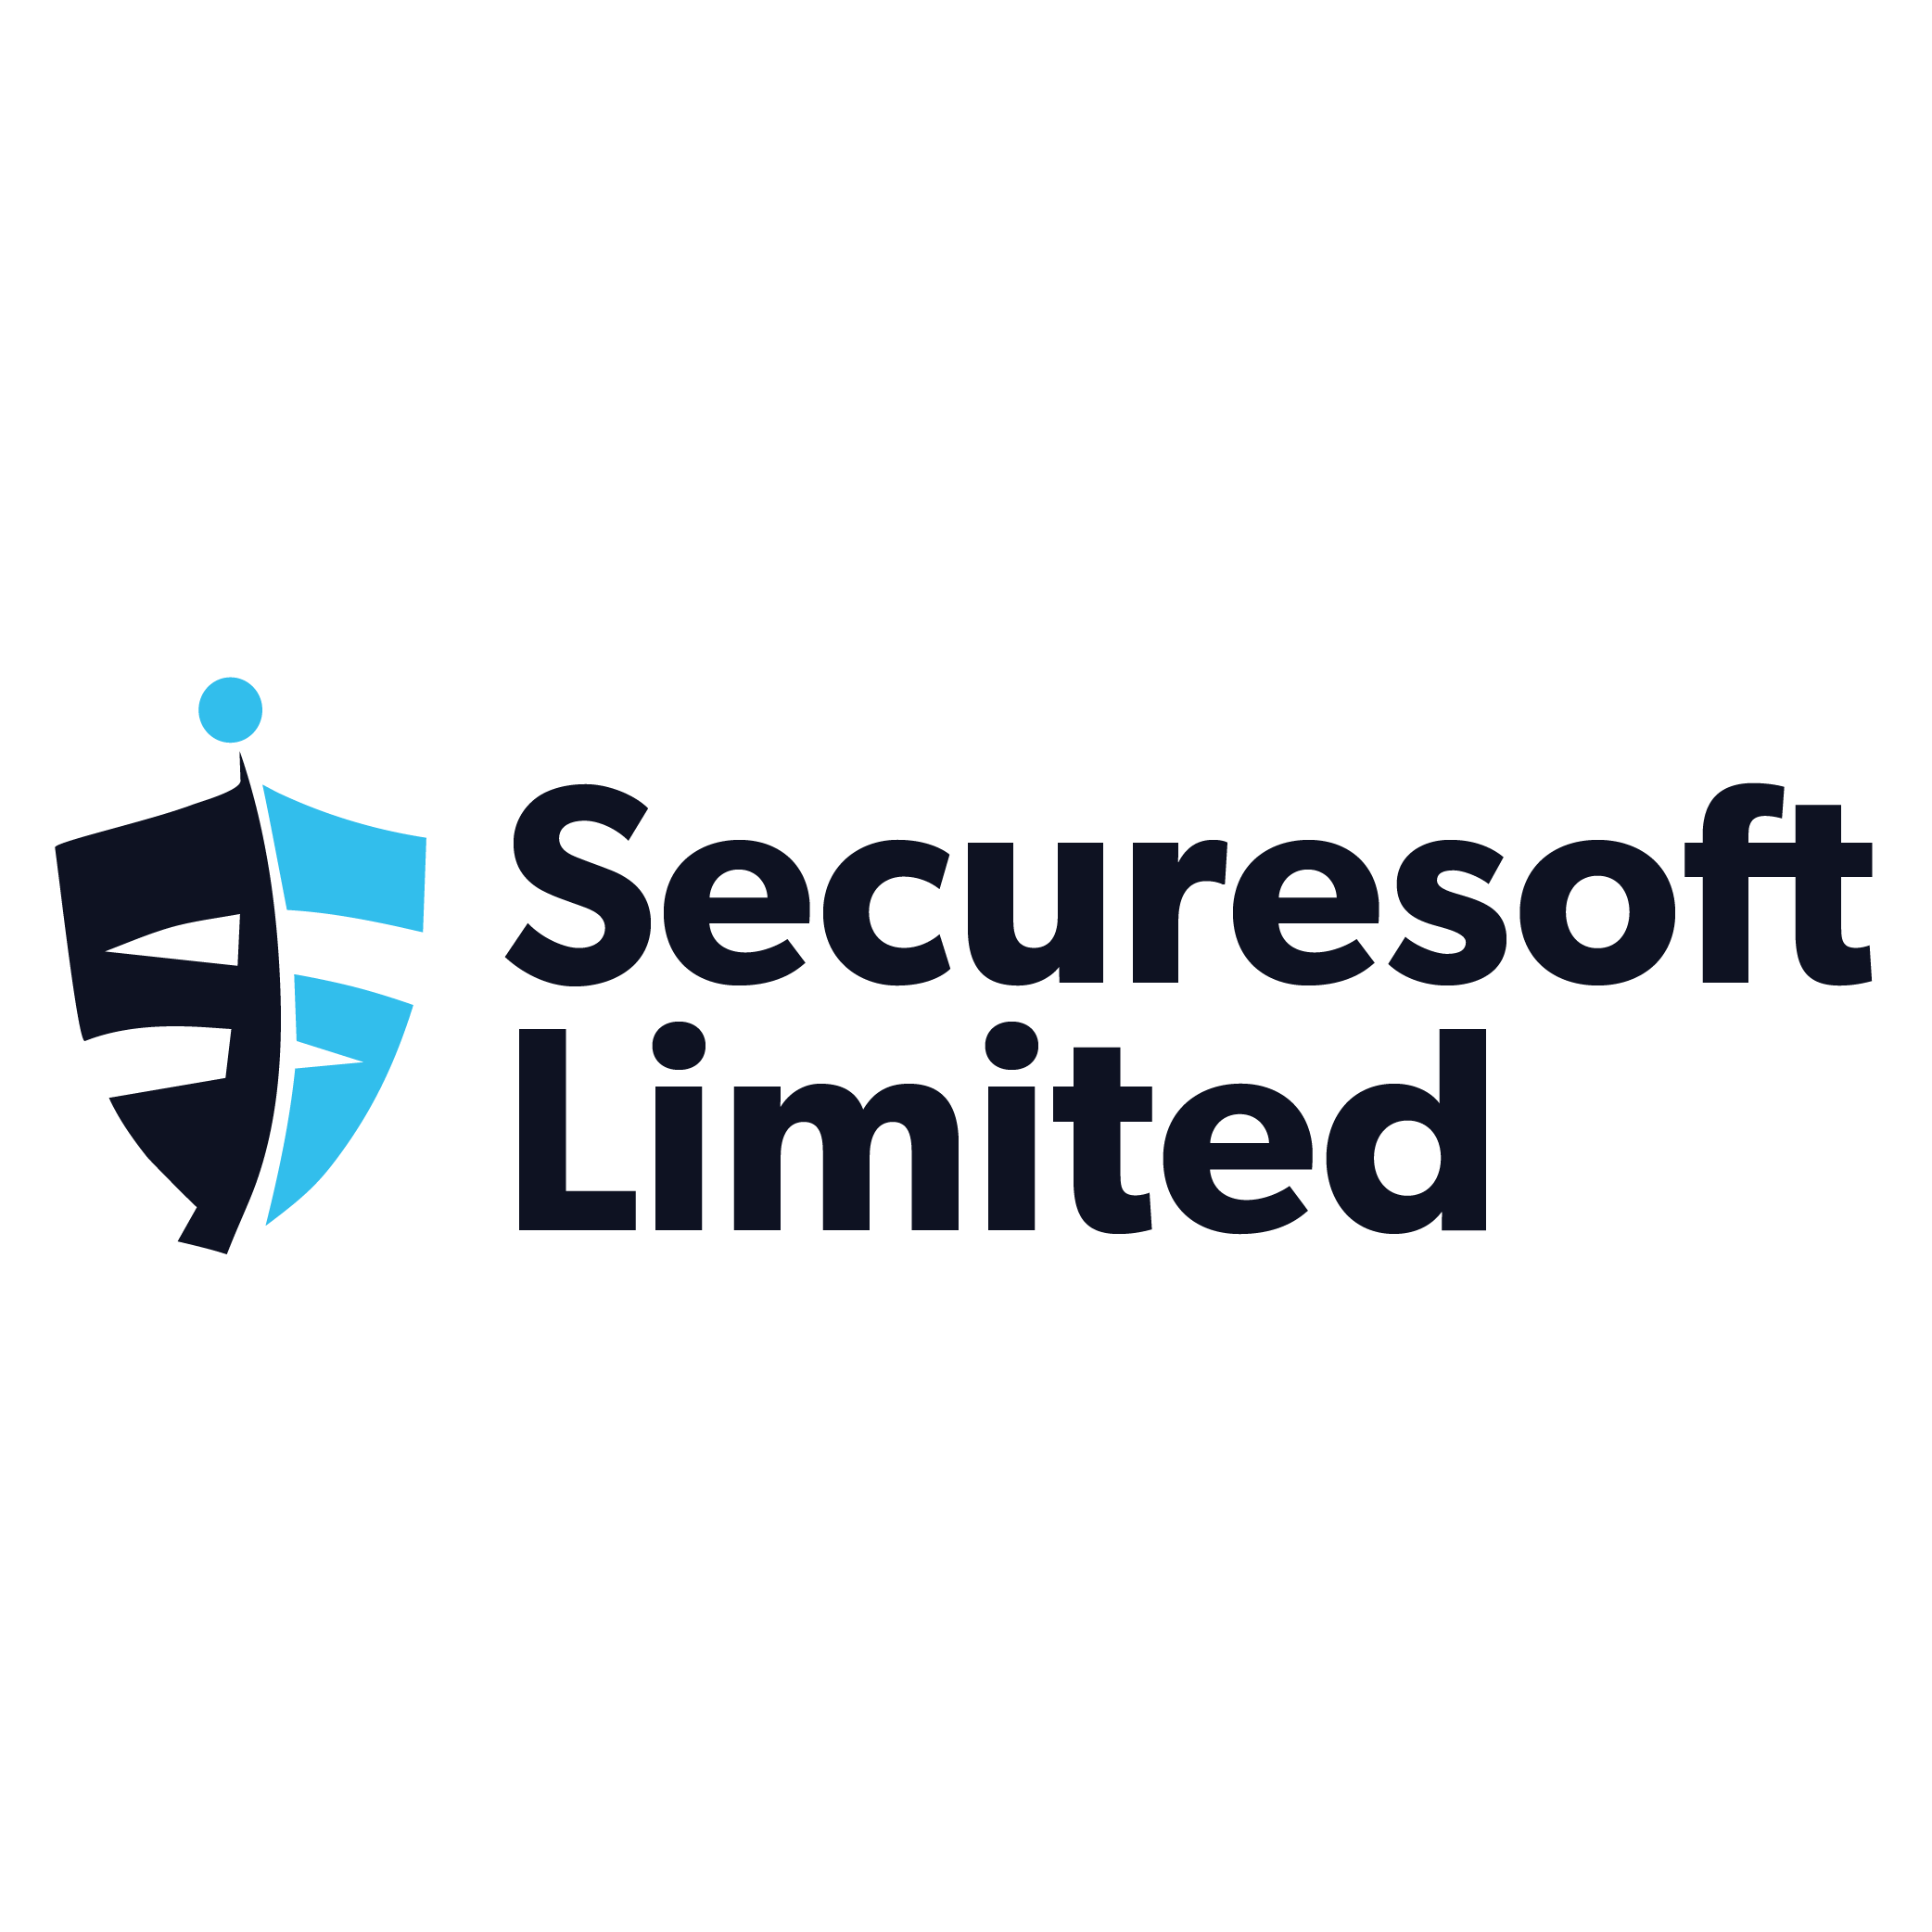 Securesoft Limited